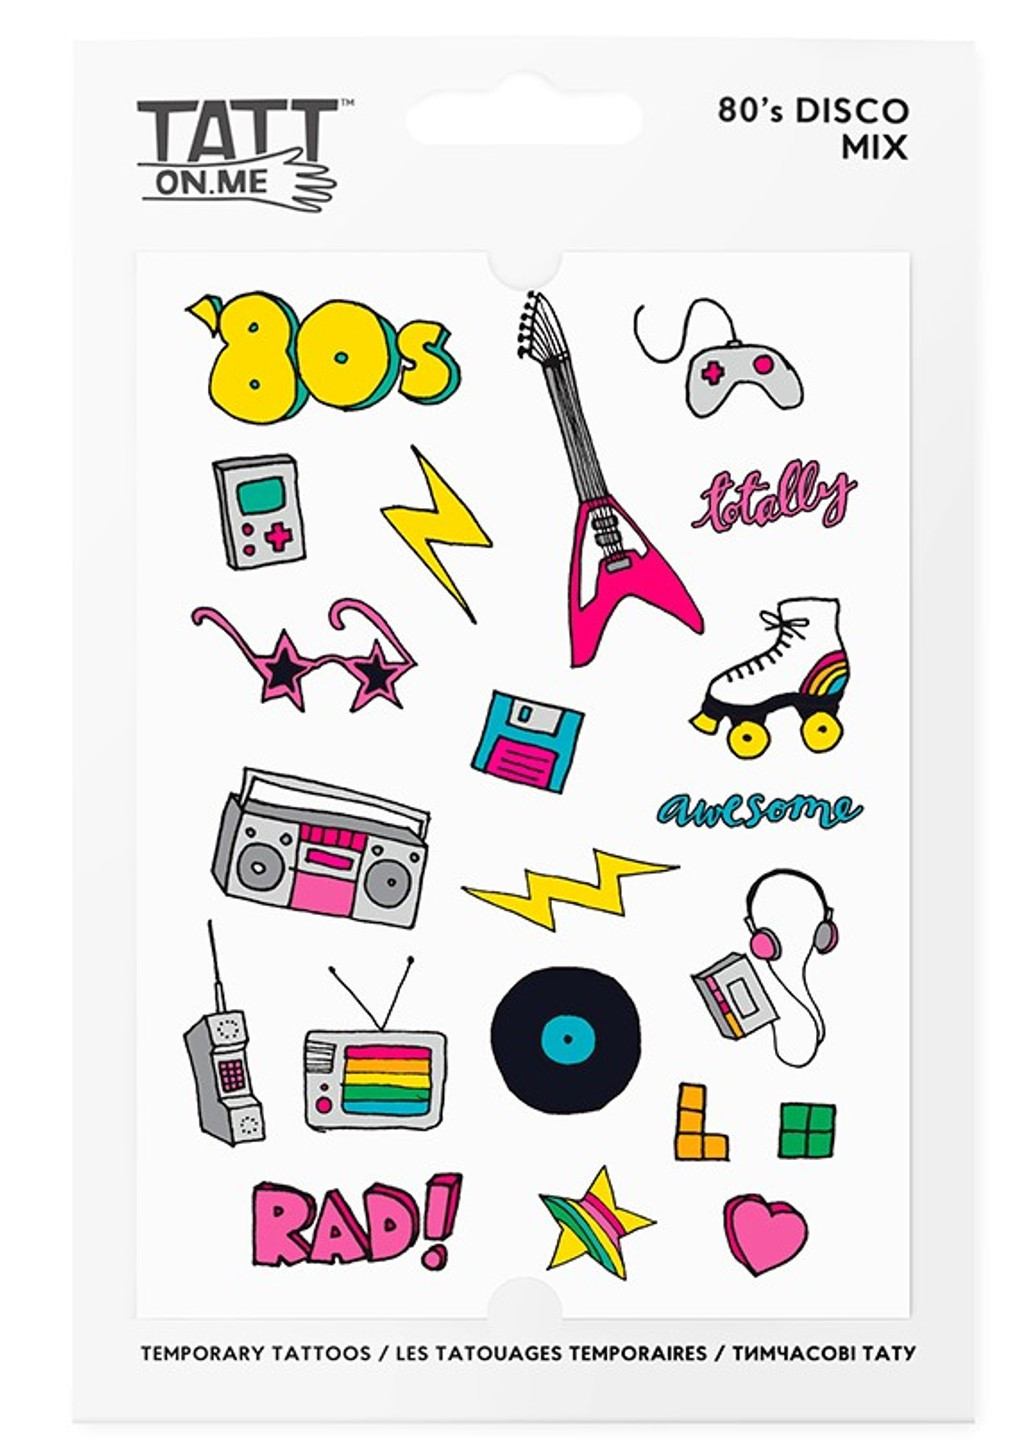 Временные тату "80s Disco Mix" TATTon.me (254255577)